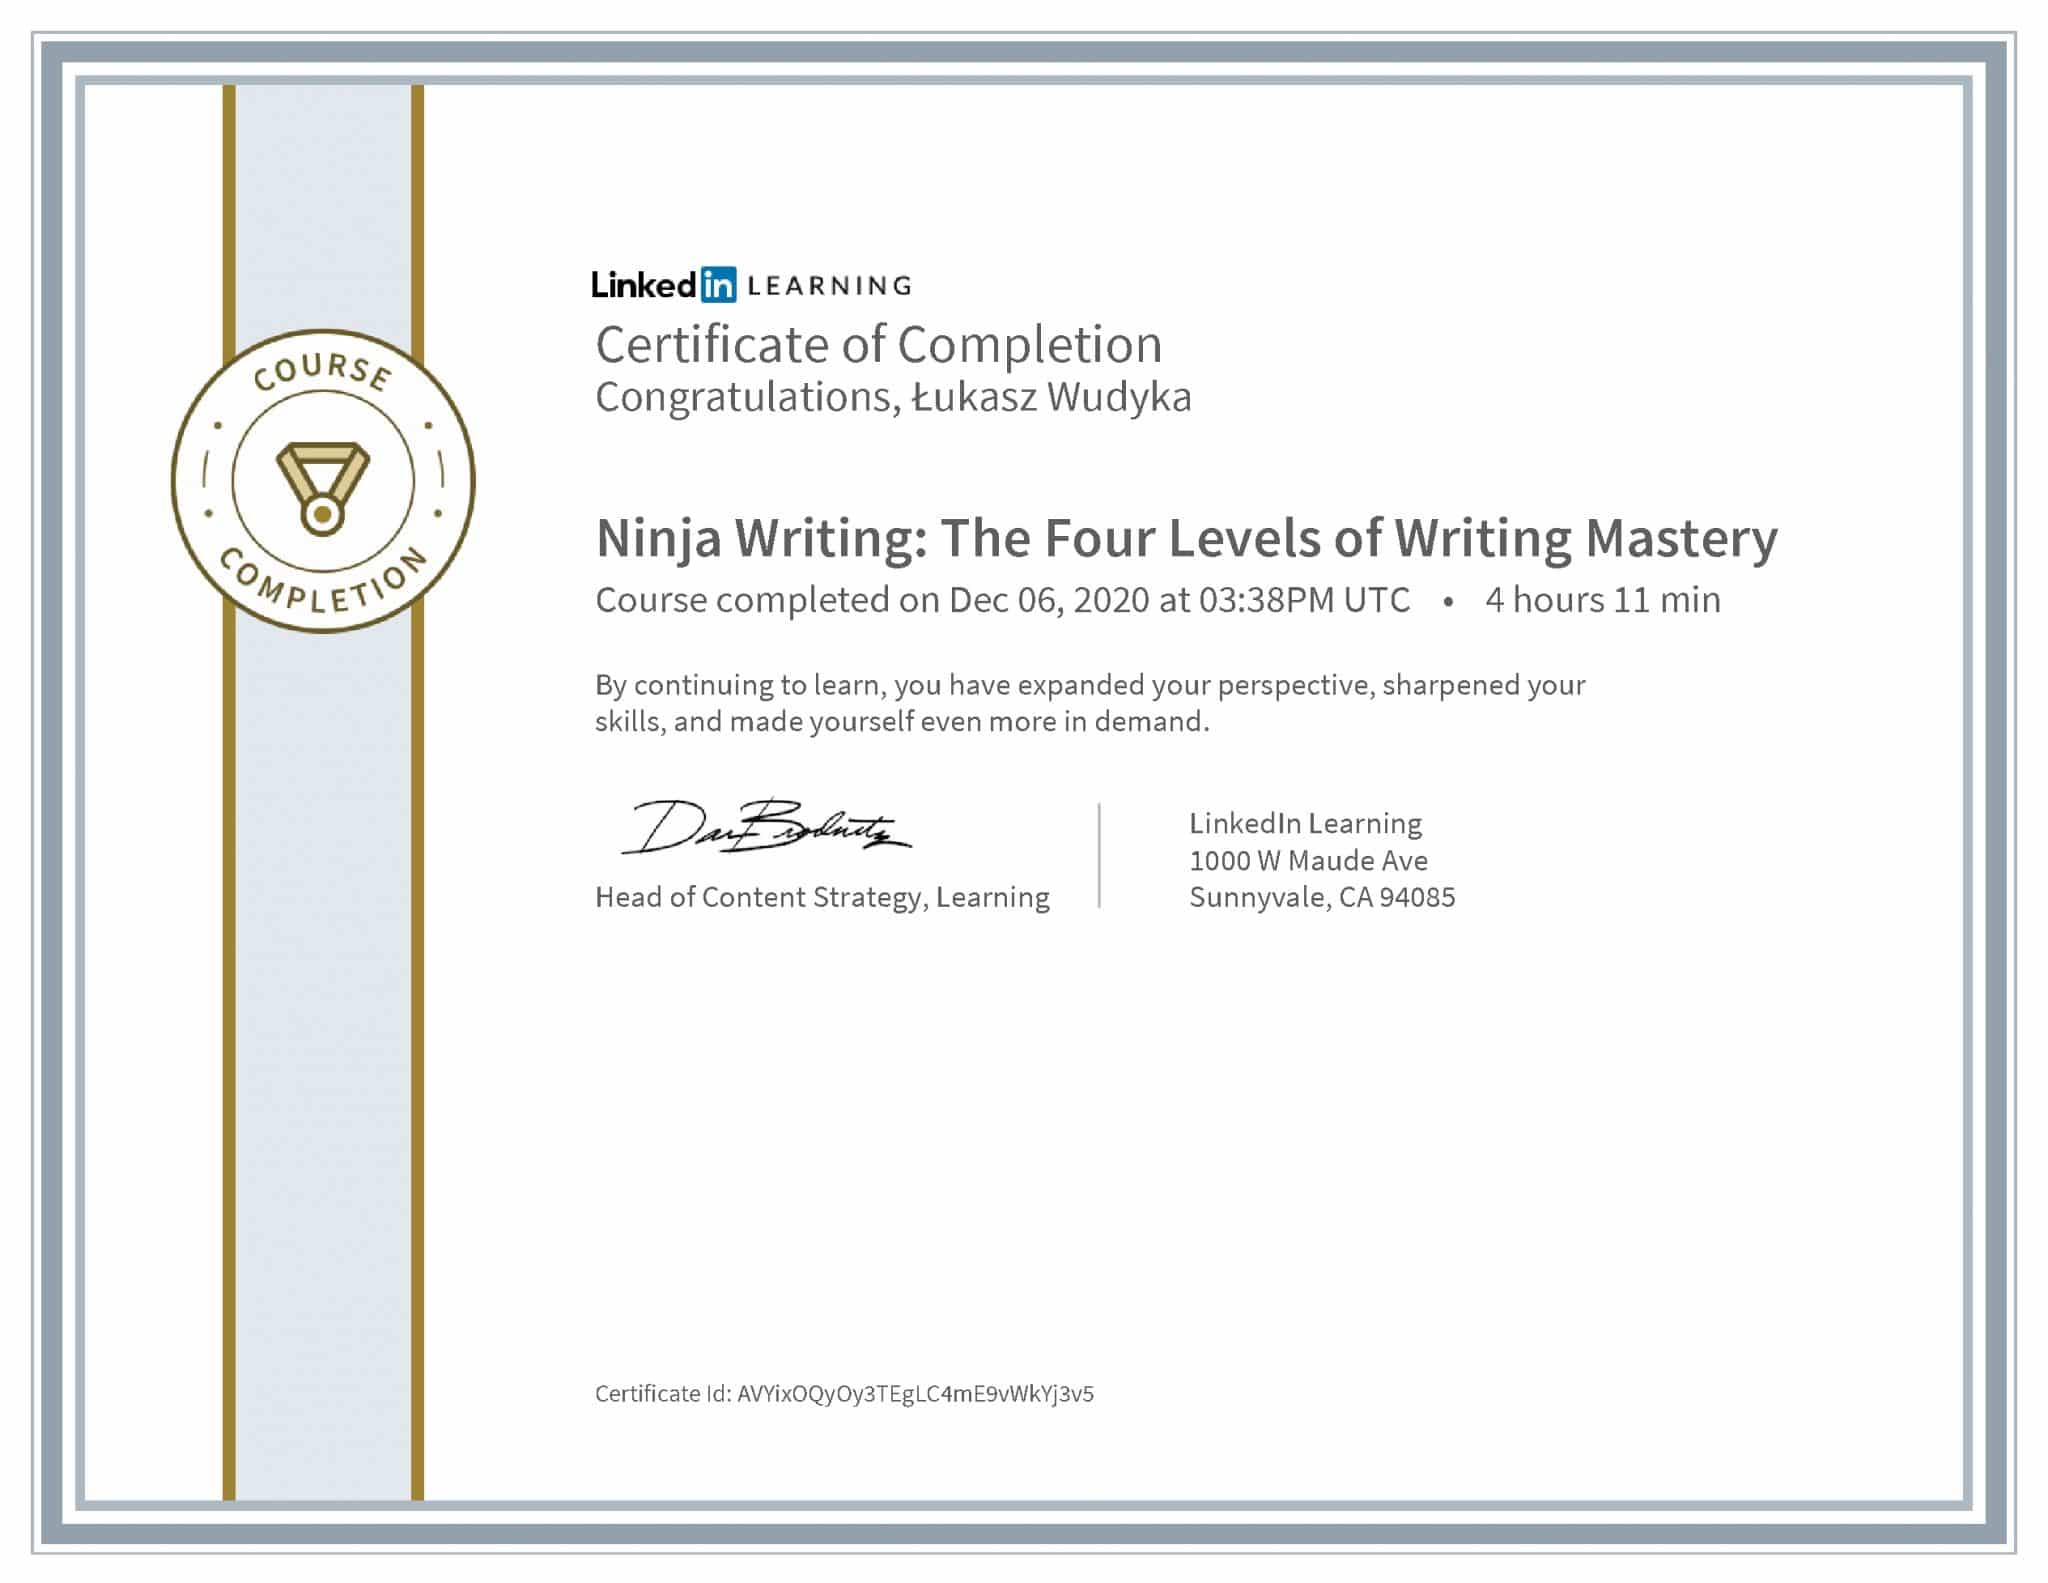 Łukasz Wudyka certyfikat LinkedIn Ninja Writing: The Four Levels of Writing Mastery